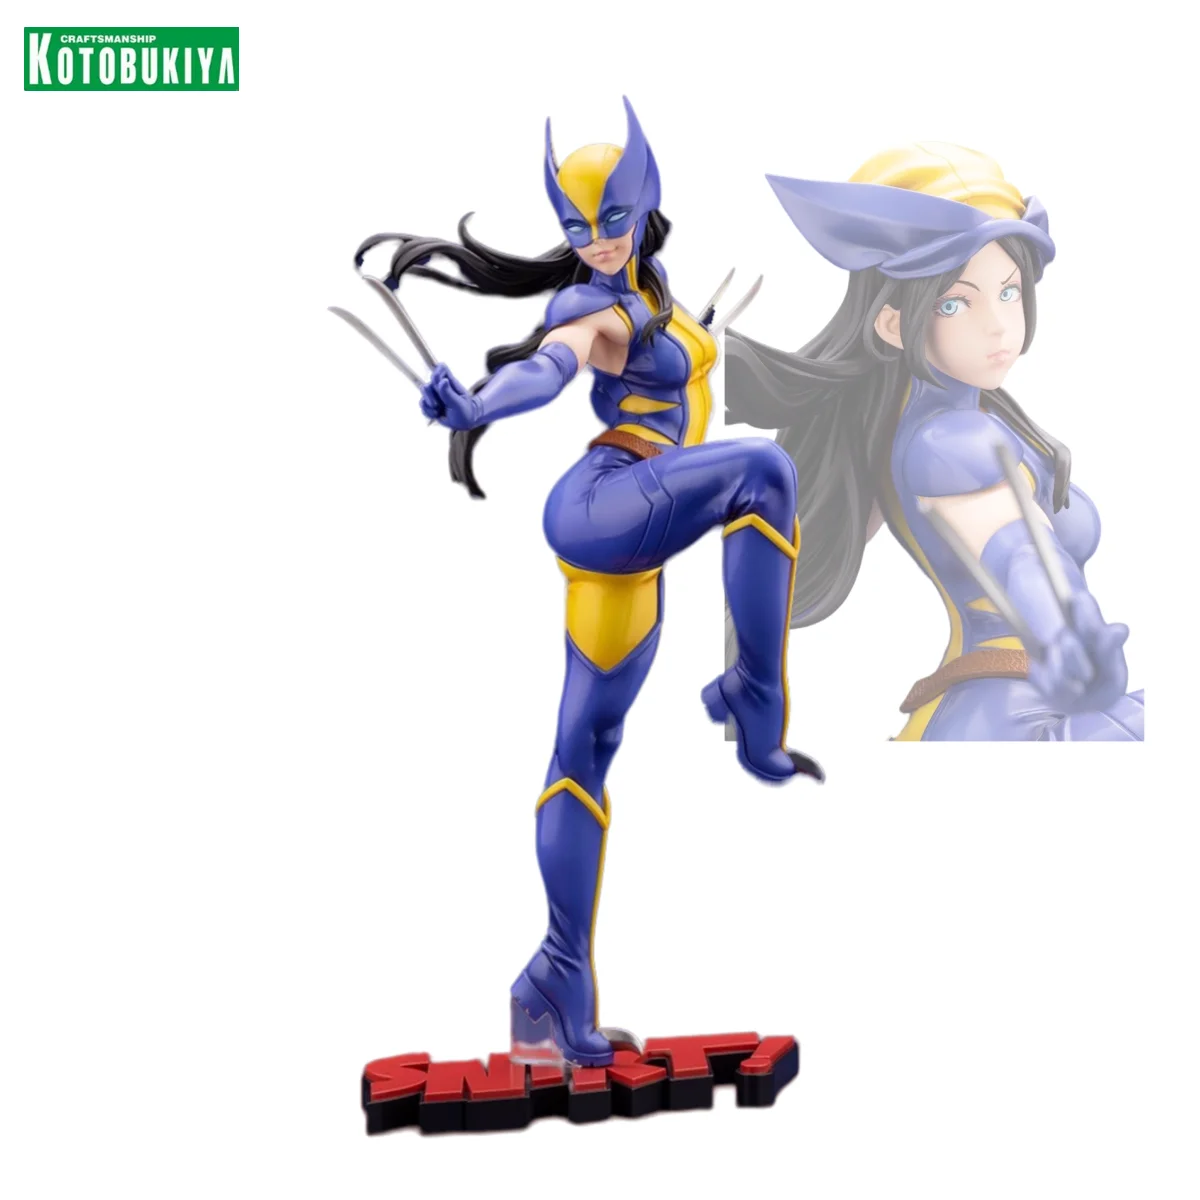 

In Stock KOTOBUKIYA Original Marvel X-Men Wolverine Laura Kinney Mutant Anime Figure Replaceable Face Action Figure Toy Gift